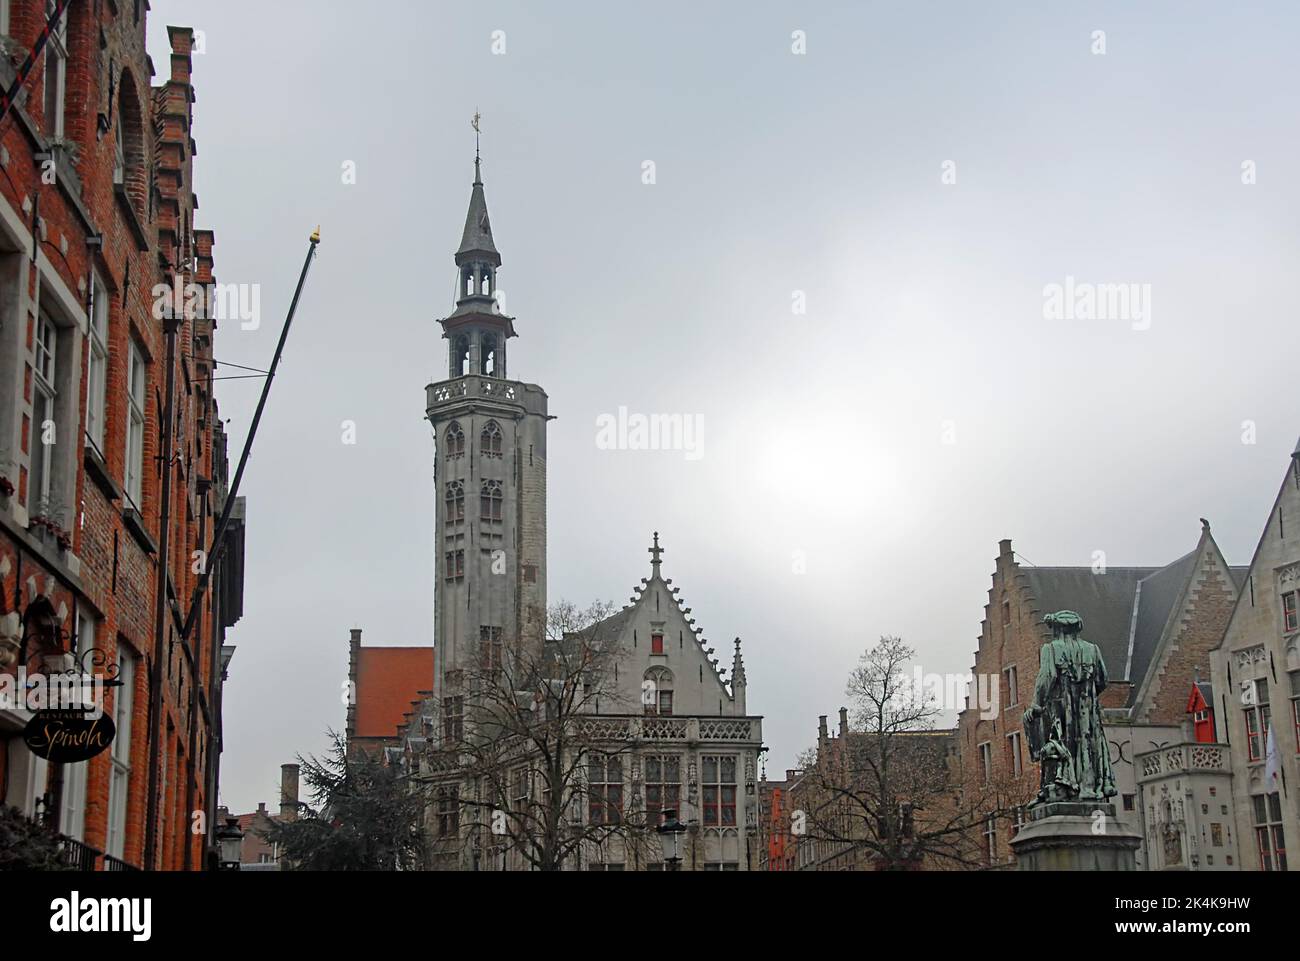 Brugge or Bruges, West Flanders, Belgium: Poortersloge or Burghers' Lodge in Brugge. View with the Jan Van Eyck statue in the foreground. Stock Photo